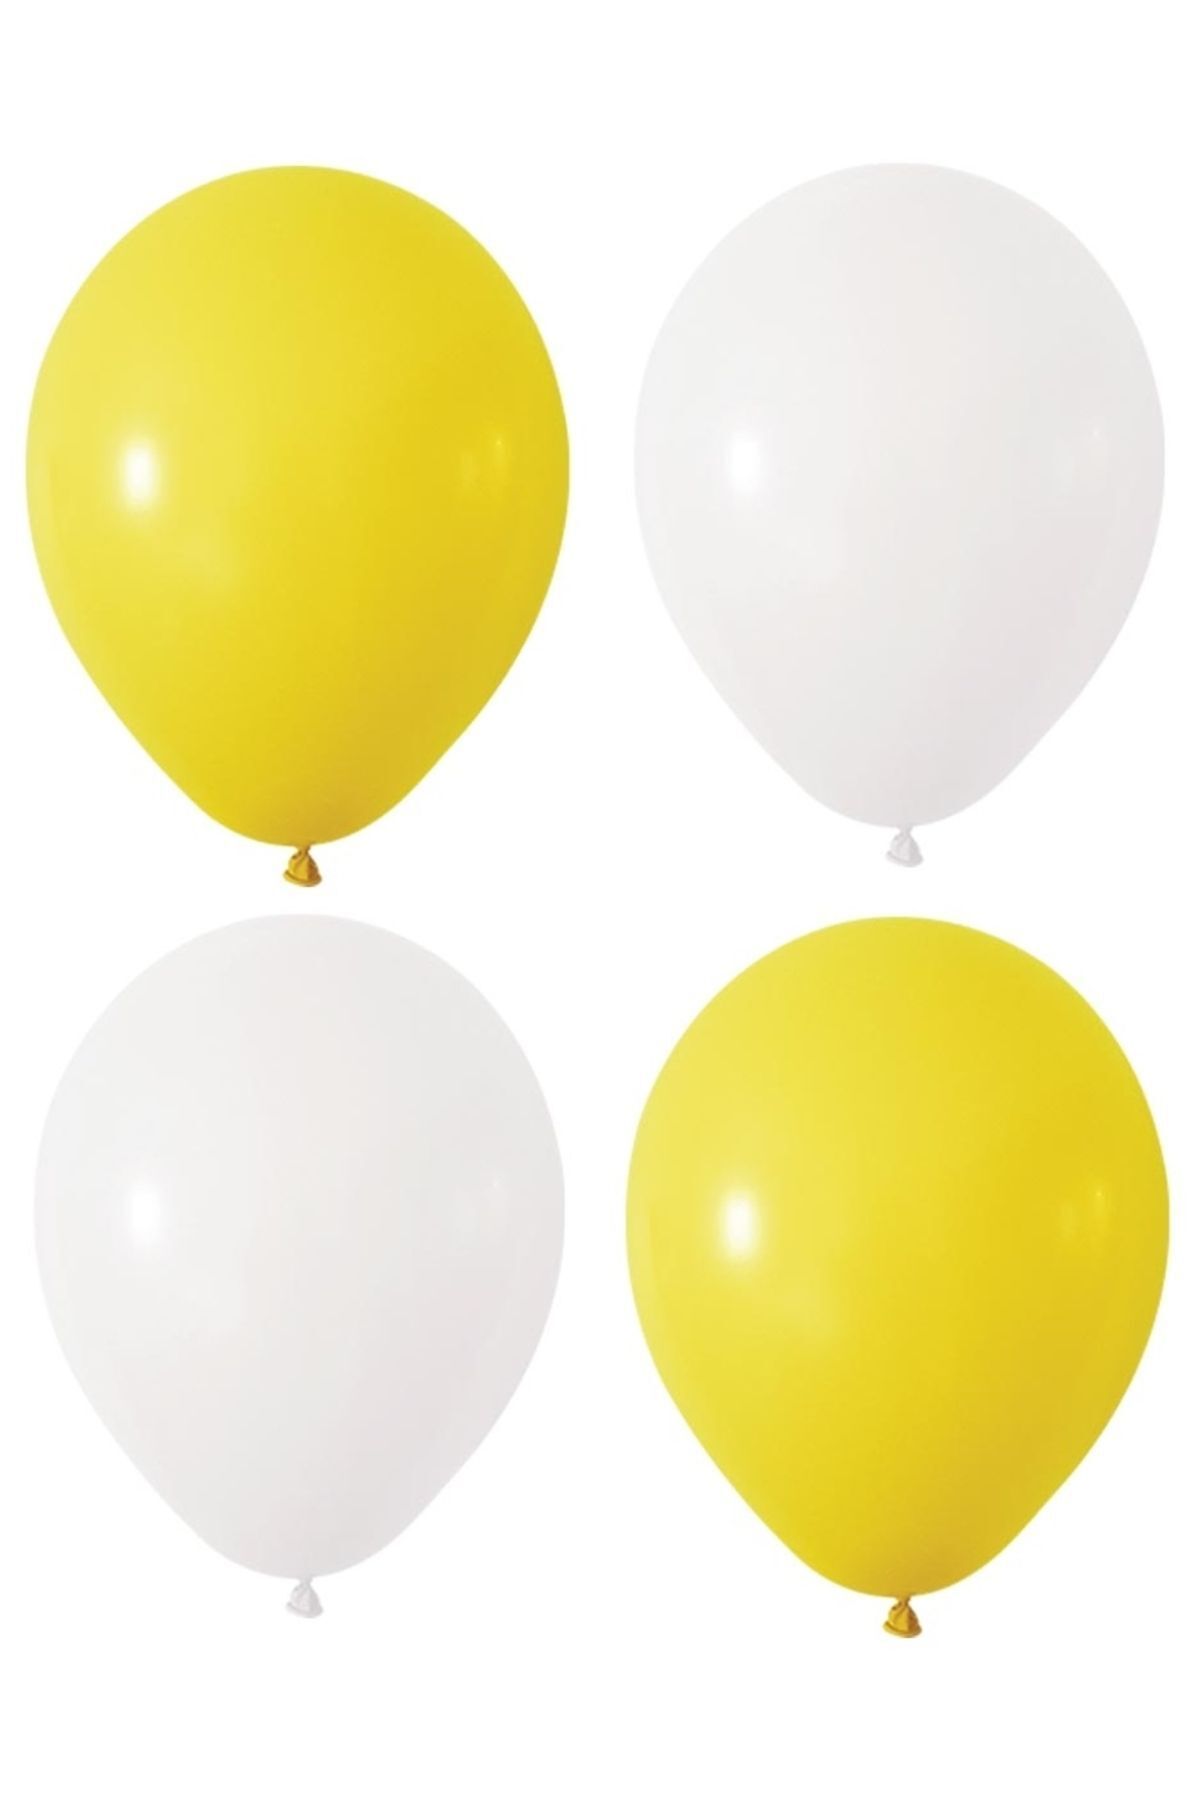 HKNYS Sarı Beyaz Renk Pastel Lateks Balon 20 Adet